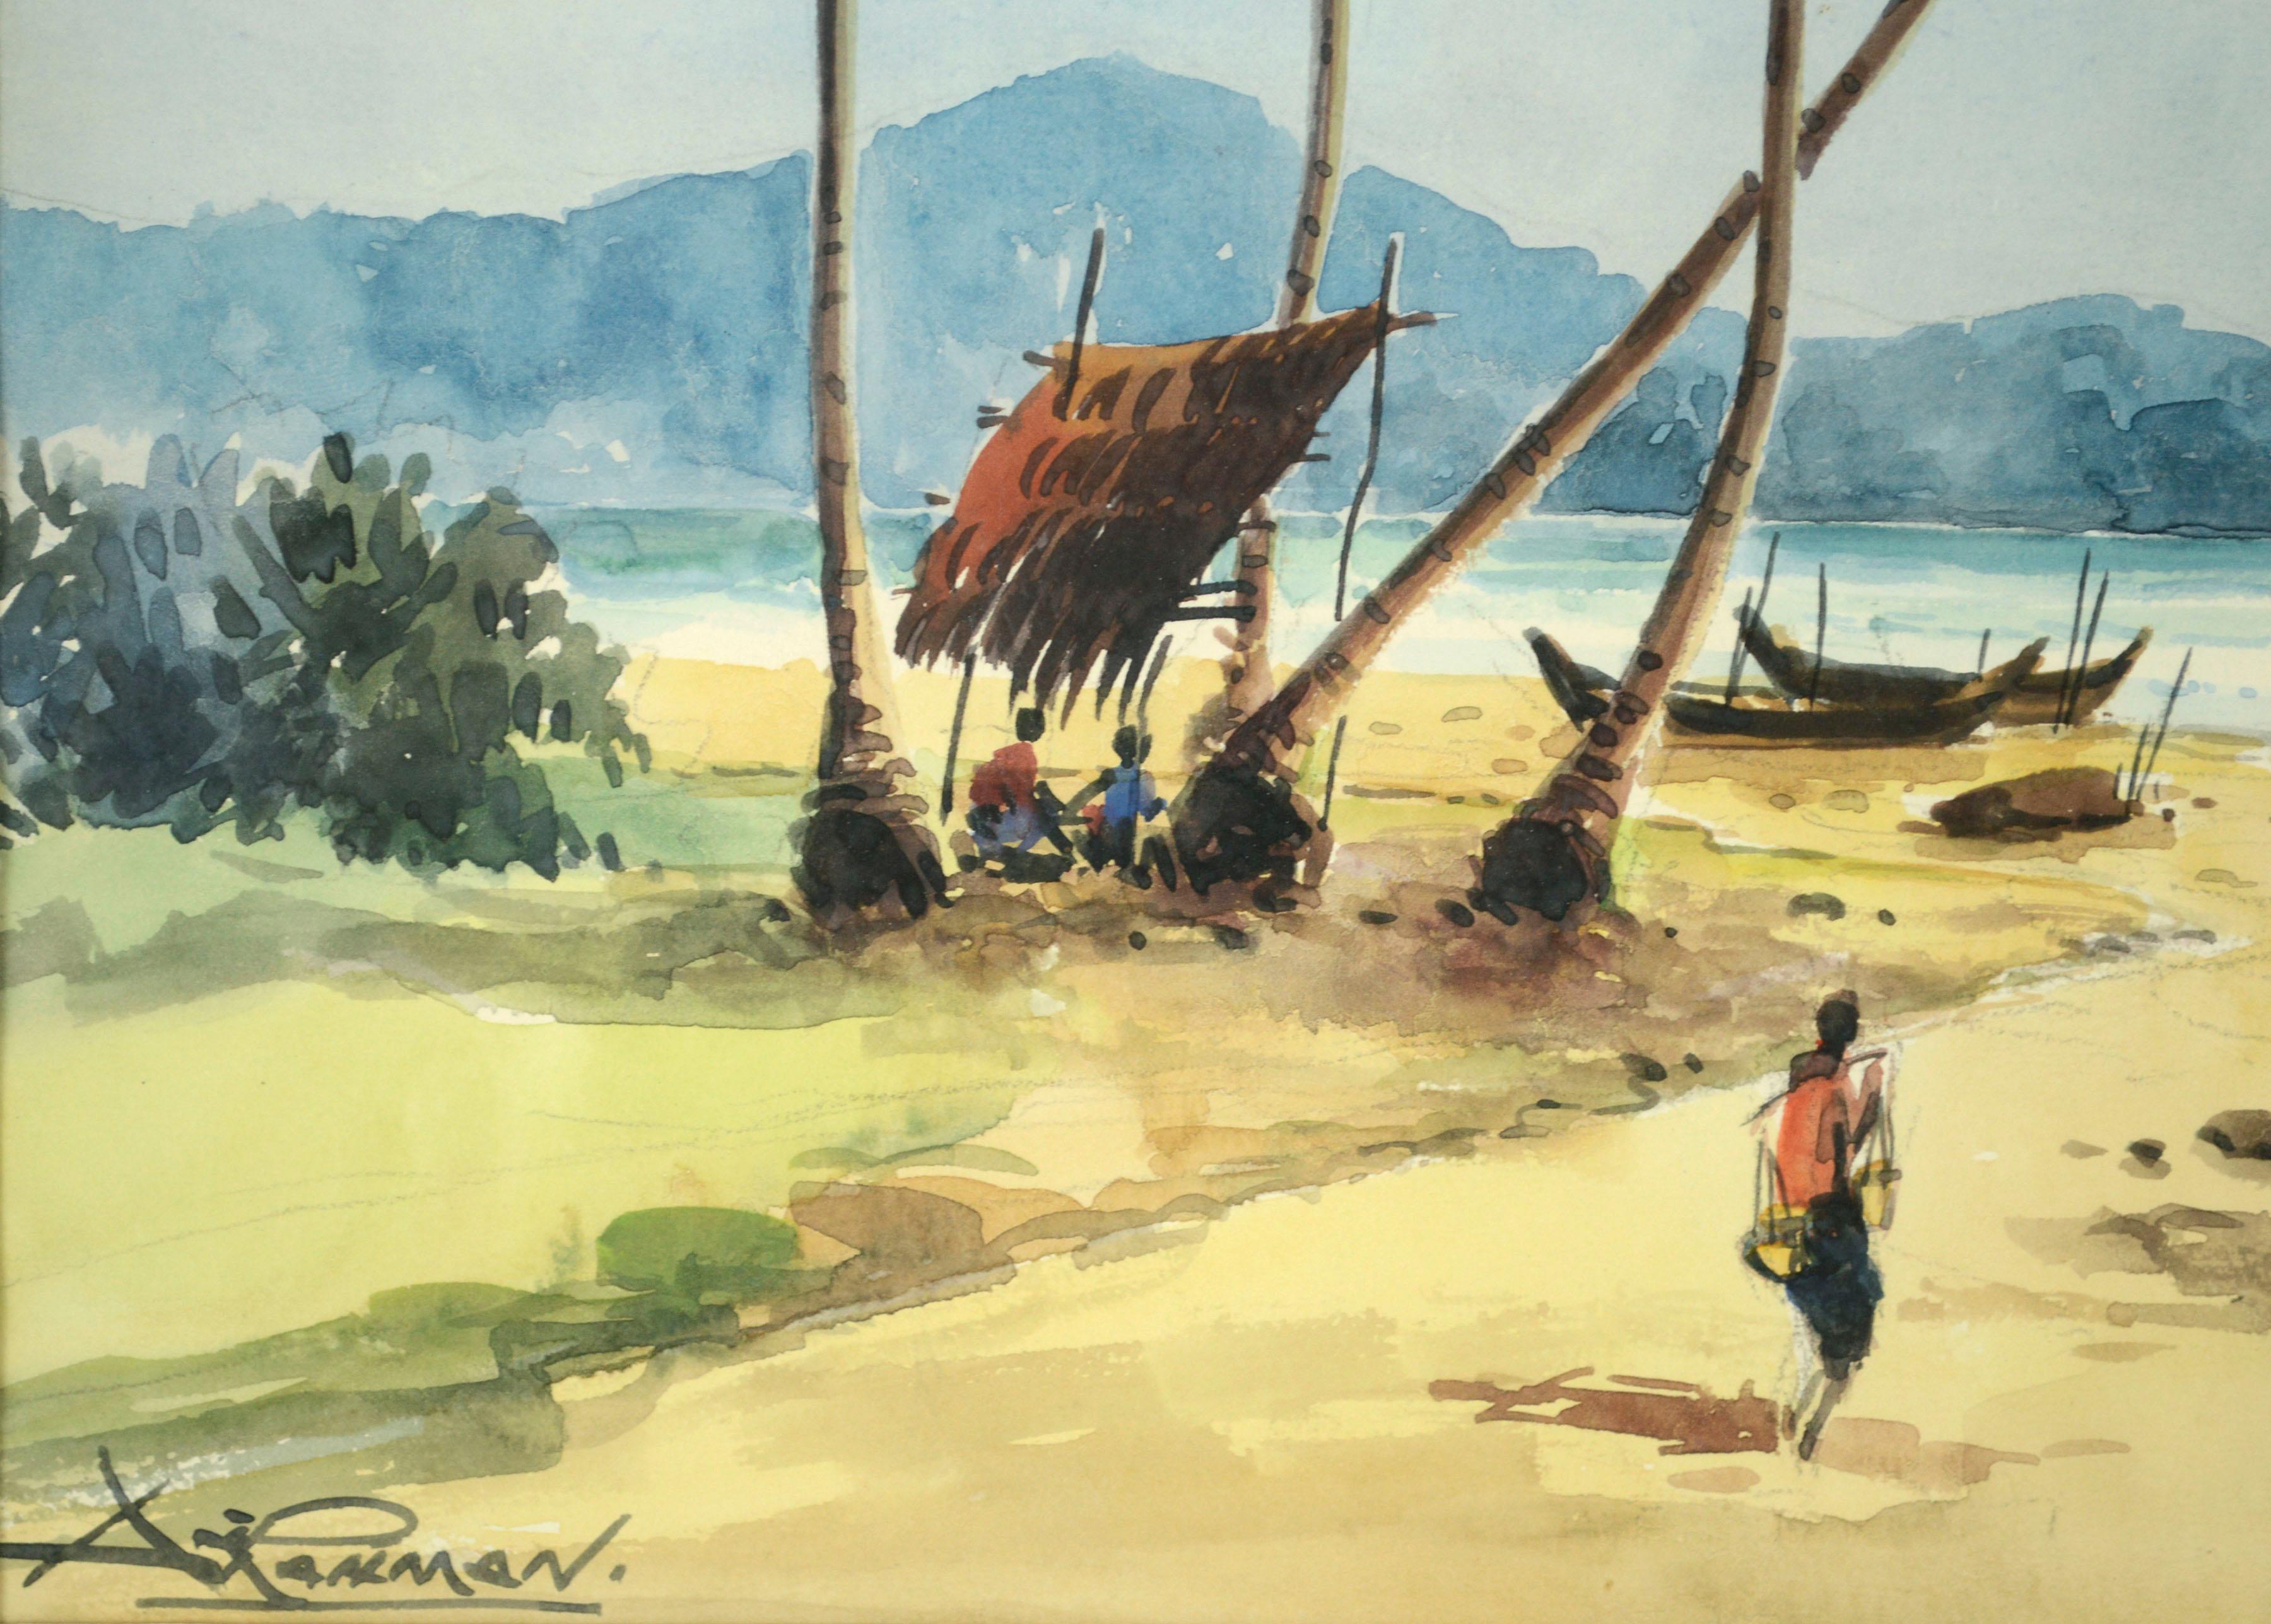 Figures on the Beach, Mid Century East Java Indonesia Coast Landscape Watercolor - Impressionist Art by Amang Rahman Jubair